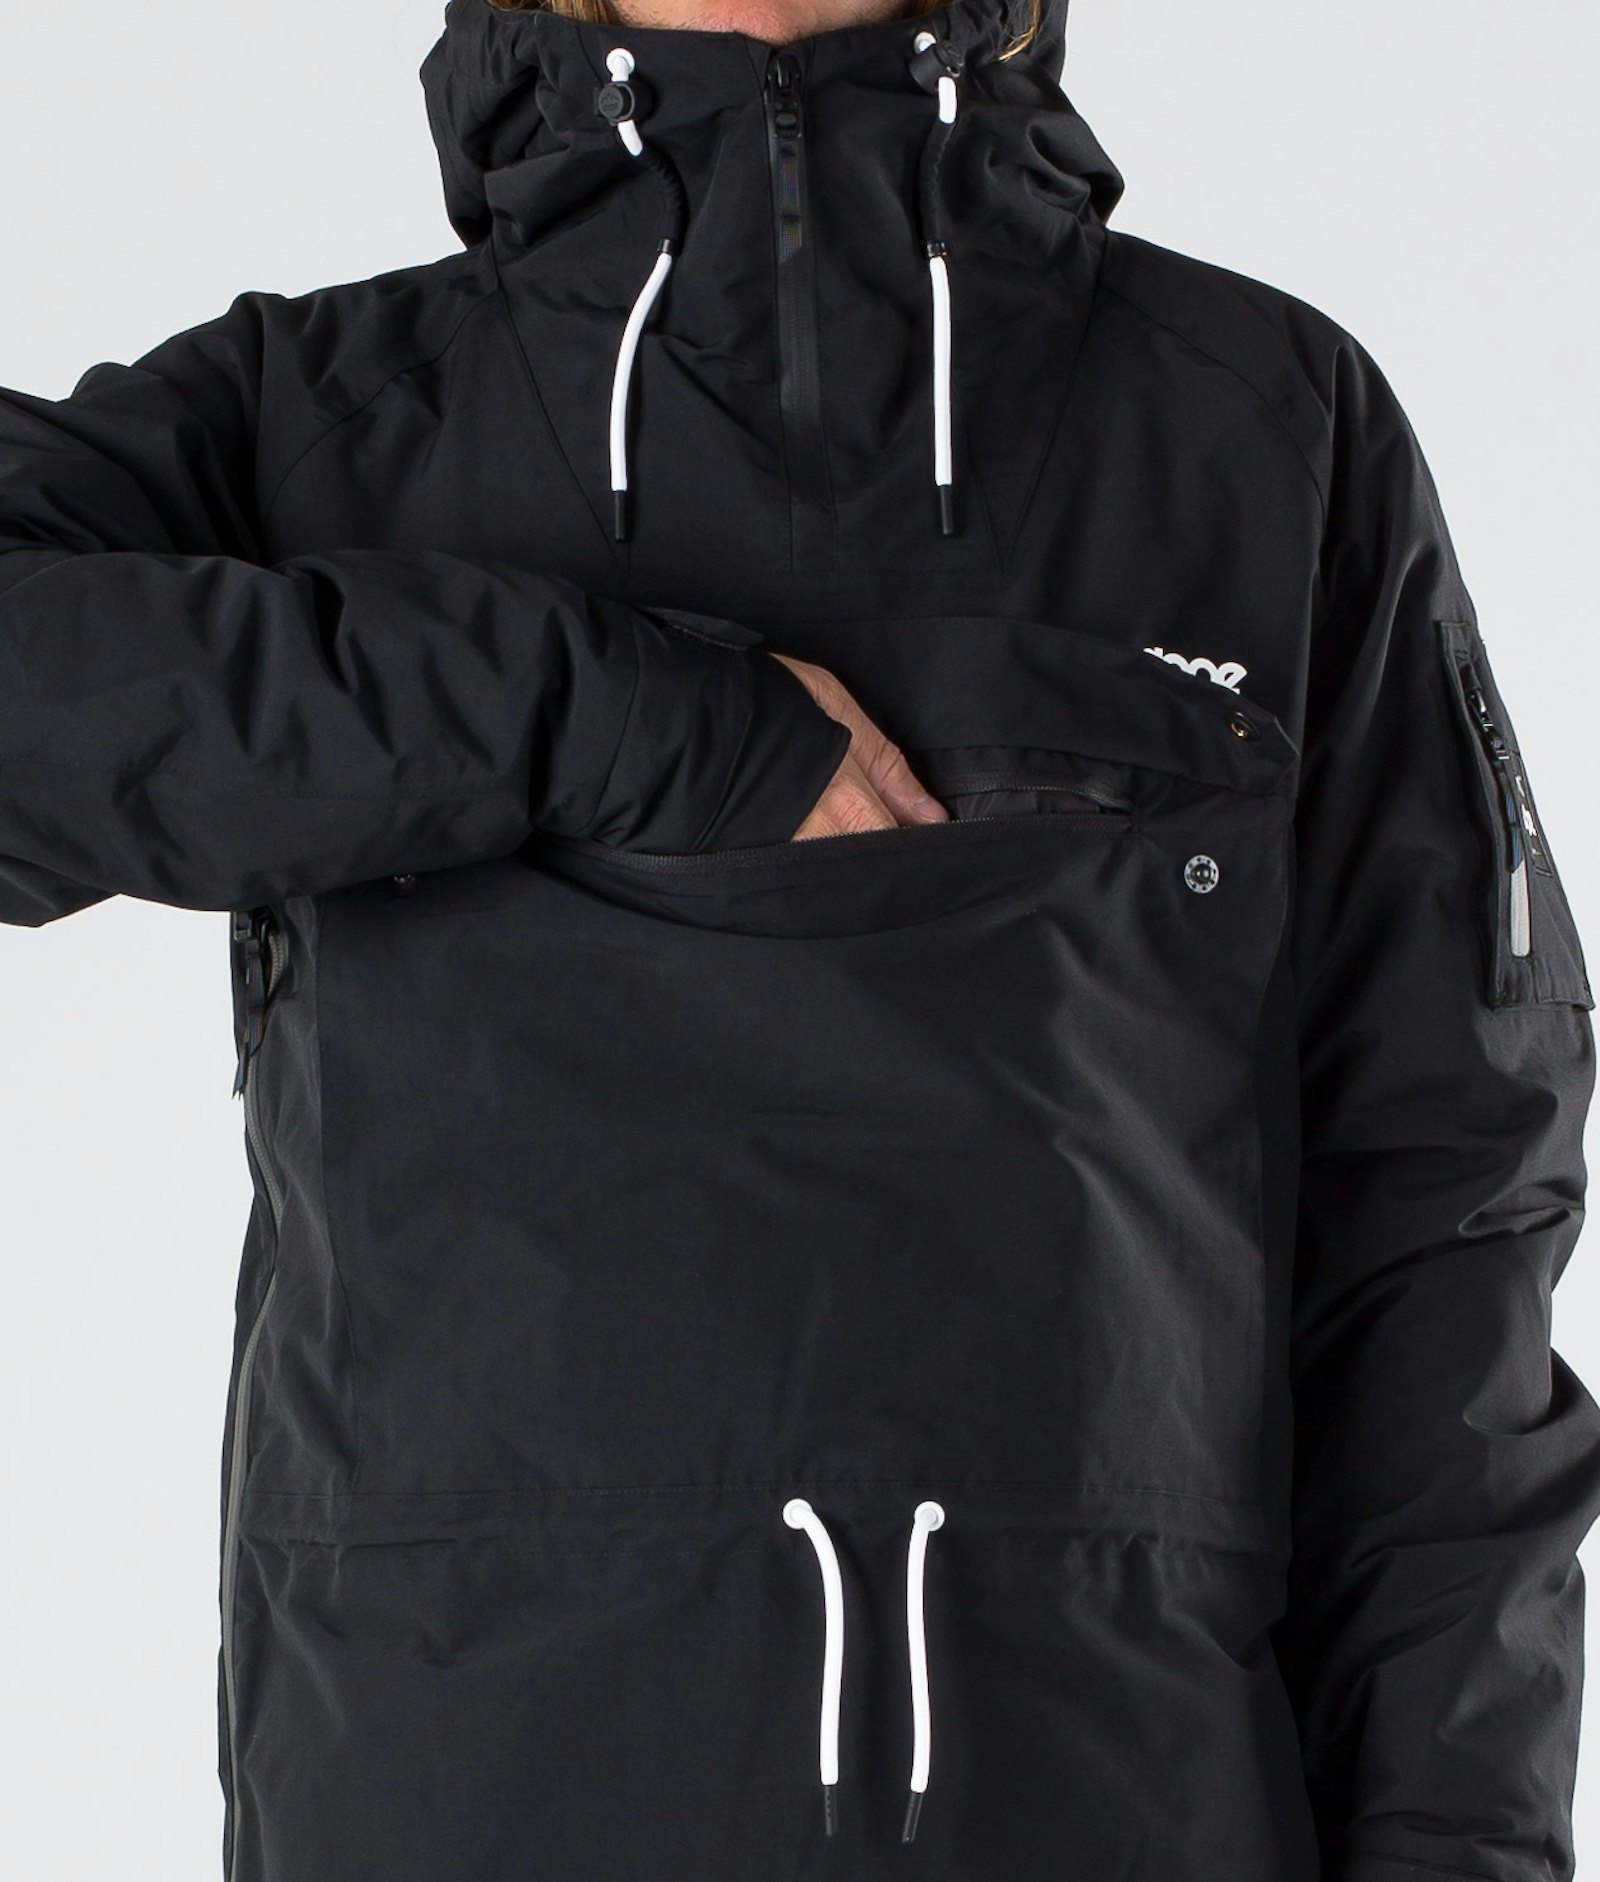 Annok 2019 Snowboard Jacket Men Black Renewed, Image 5 of 11